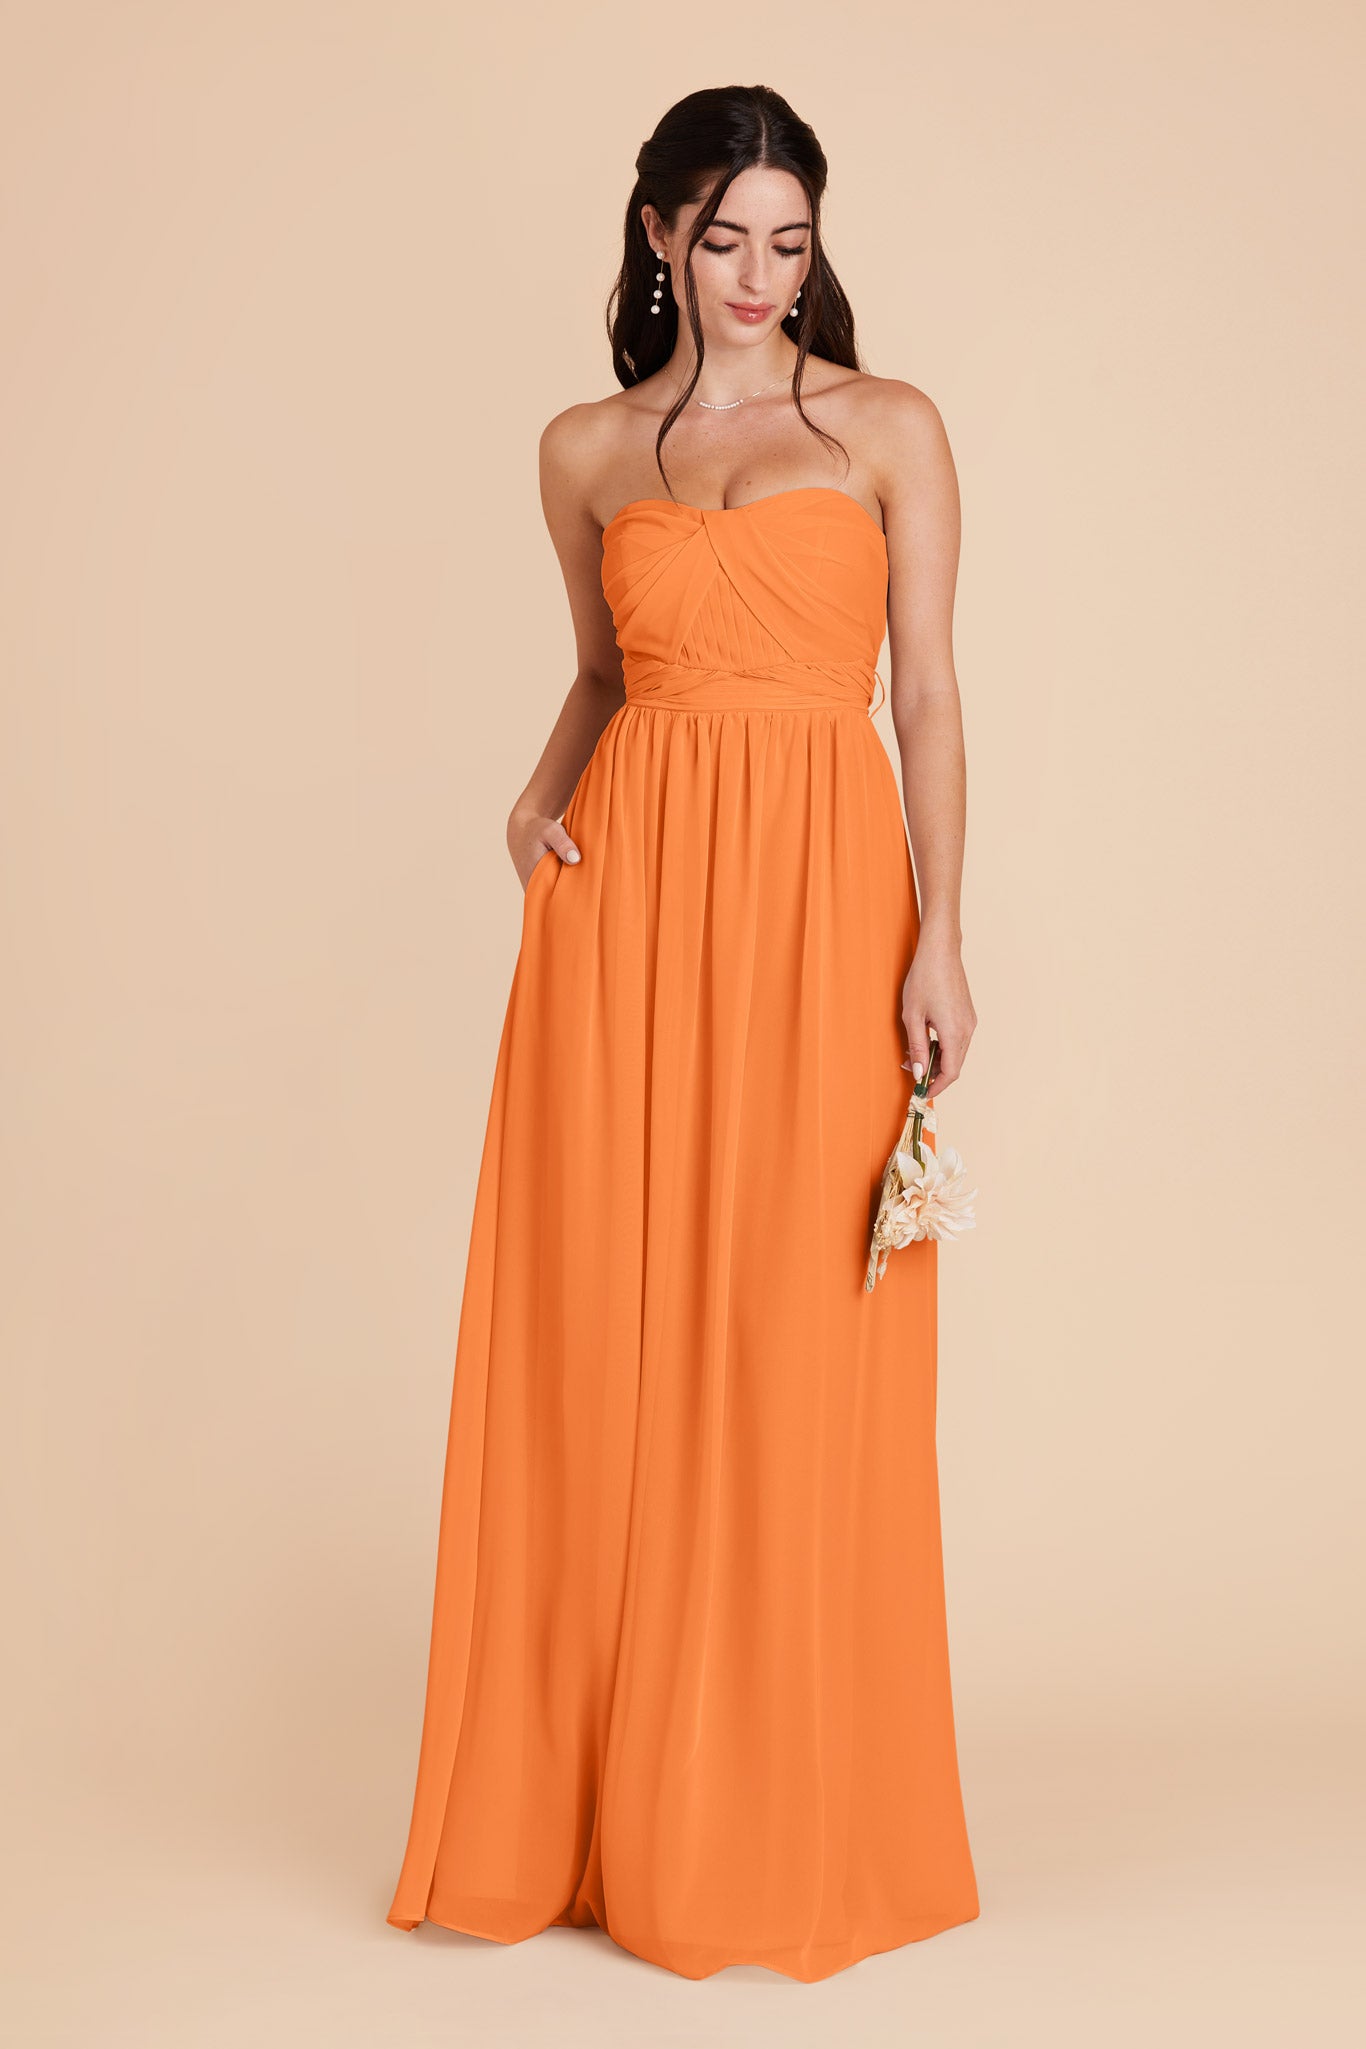 Apricot Grace Convertible Dress by Birdy Grey